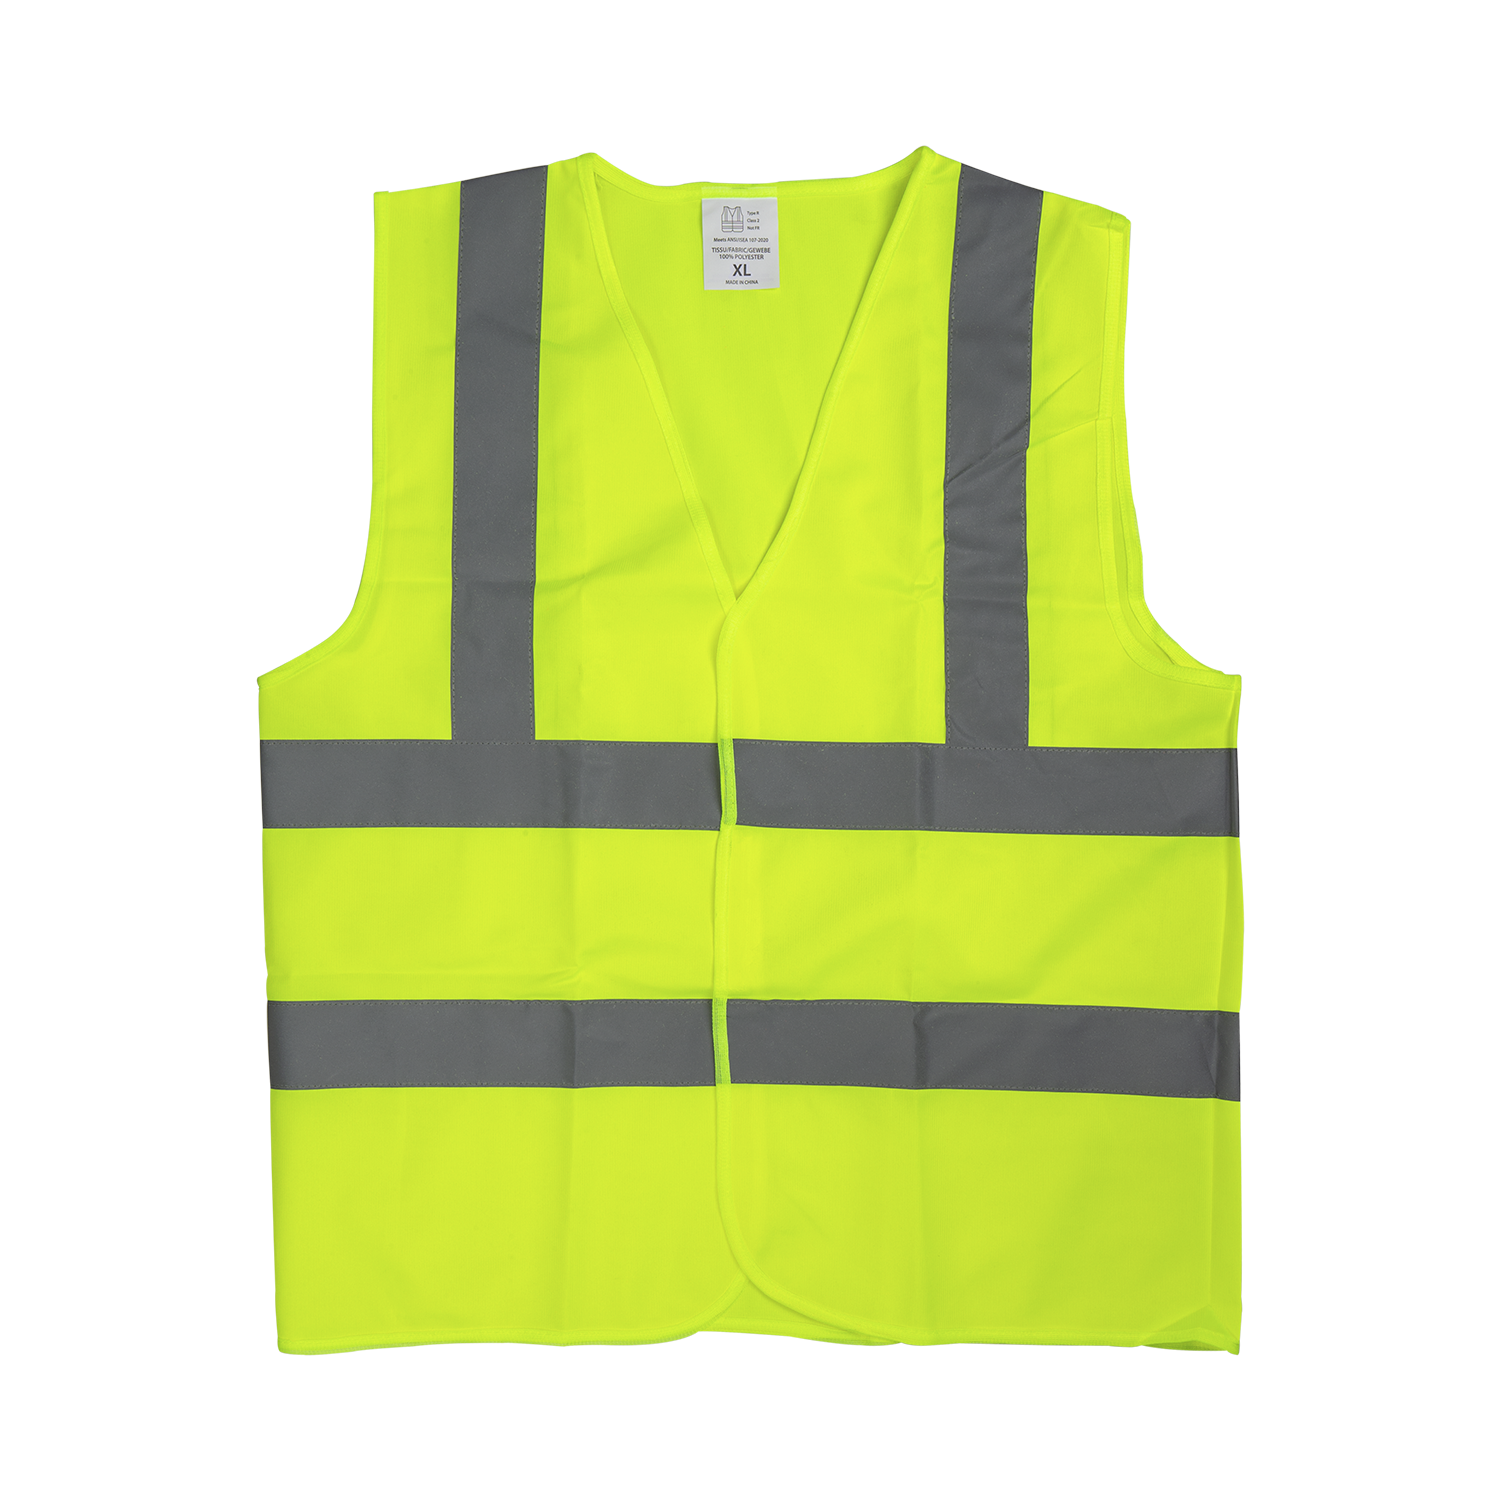 Karat High Visibility Reflective Safety Vest with Velcro Fastening